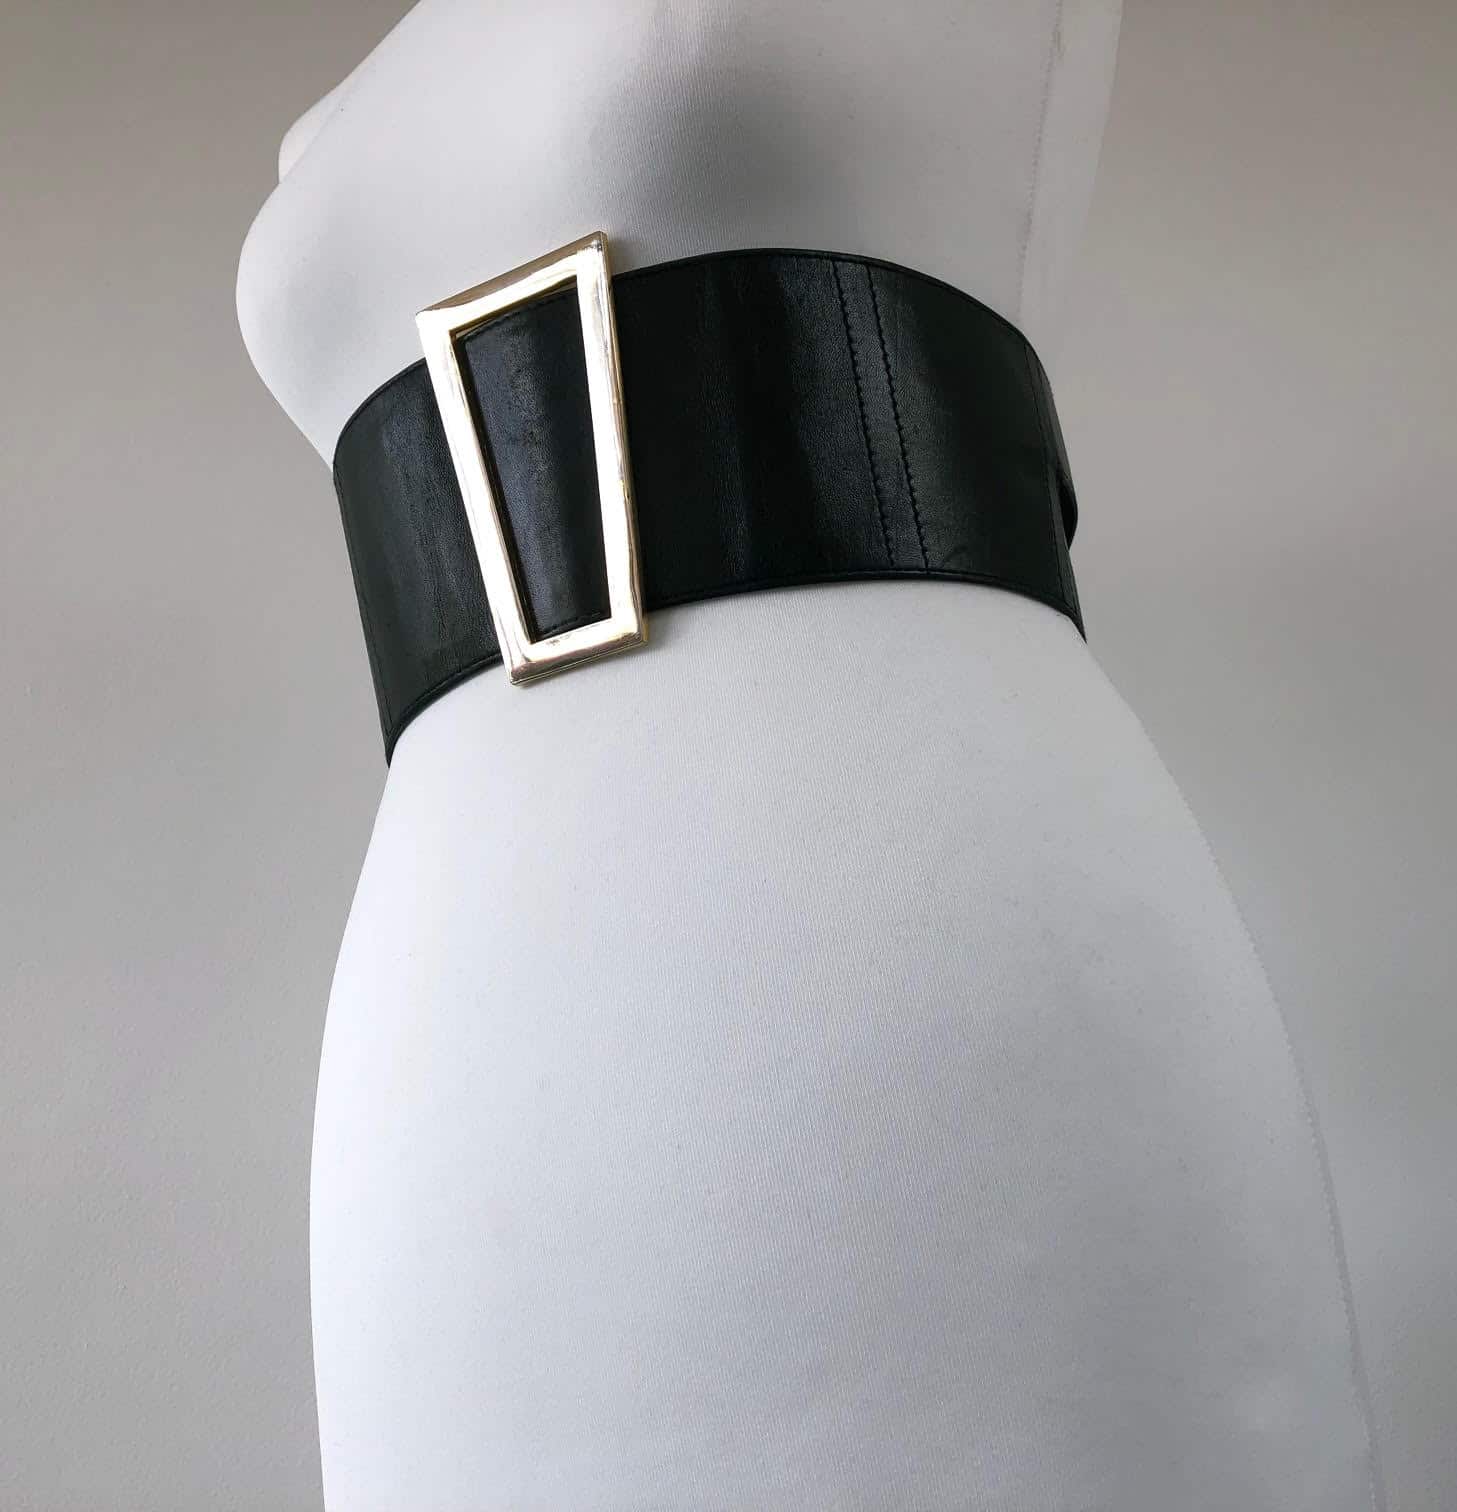 Karl Lagerfeld Corset Waist Black Leather Buckle Belt